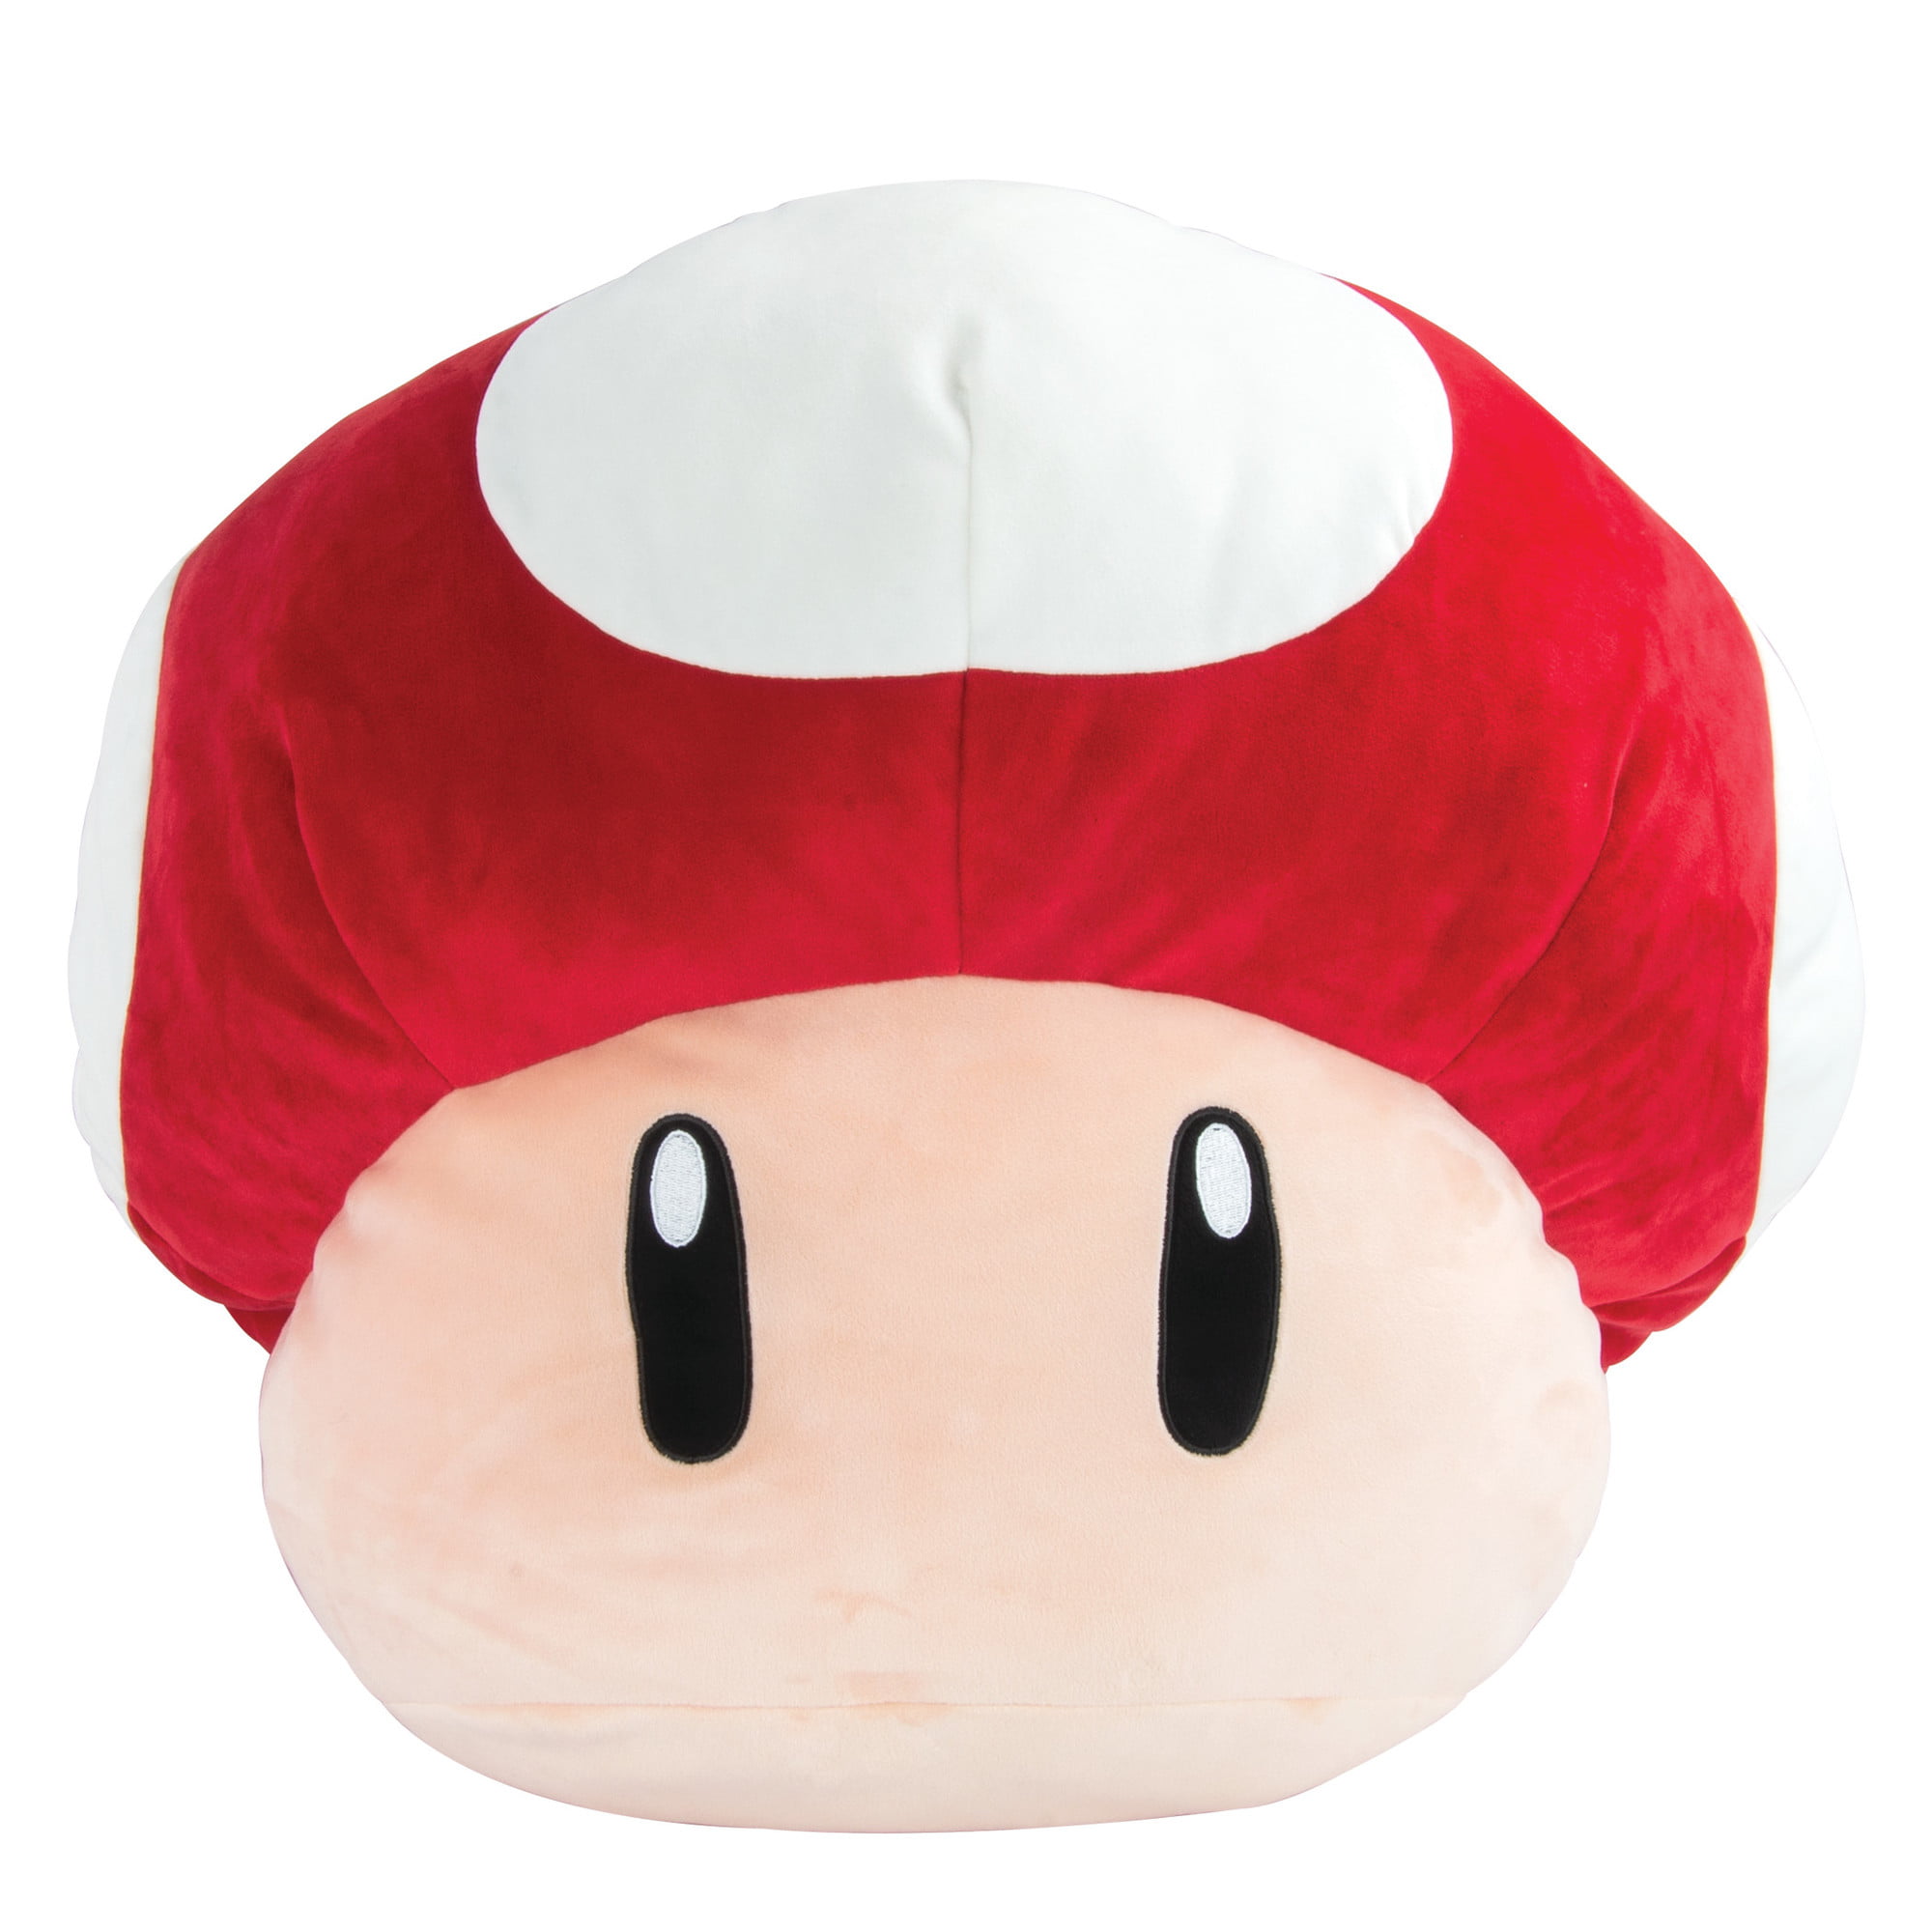 Little Buddy 1396 USA Super Mario Series 11-Inch Mushroom Pillow Plush